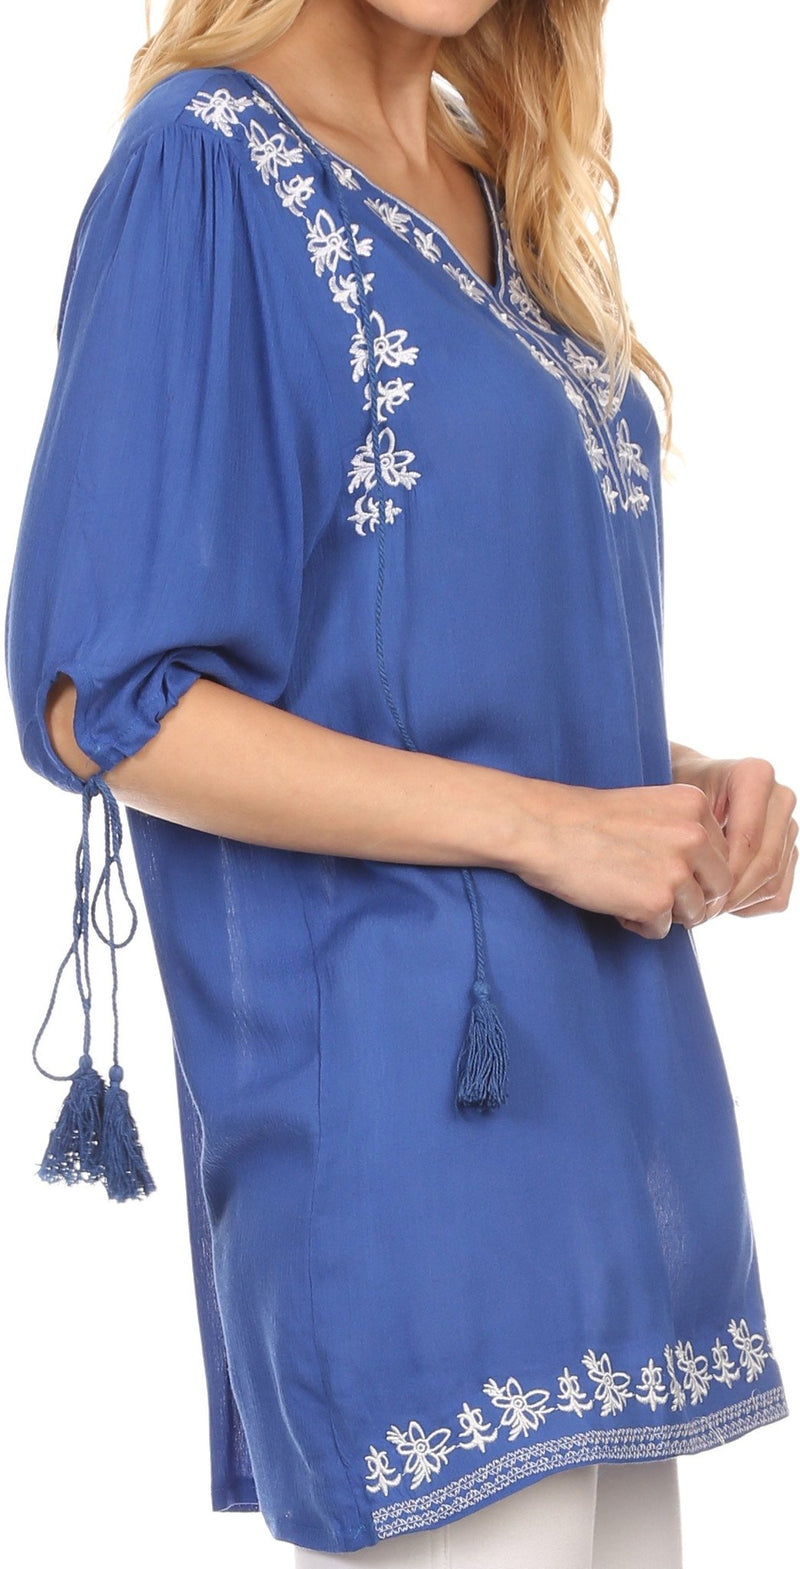 Sakkas Bonda Long 3/4 Sleeve Batik Floral Embroidered Tassle Blouse Shirt Top